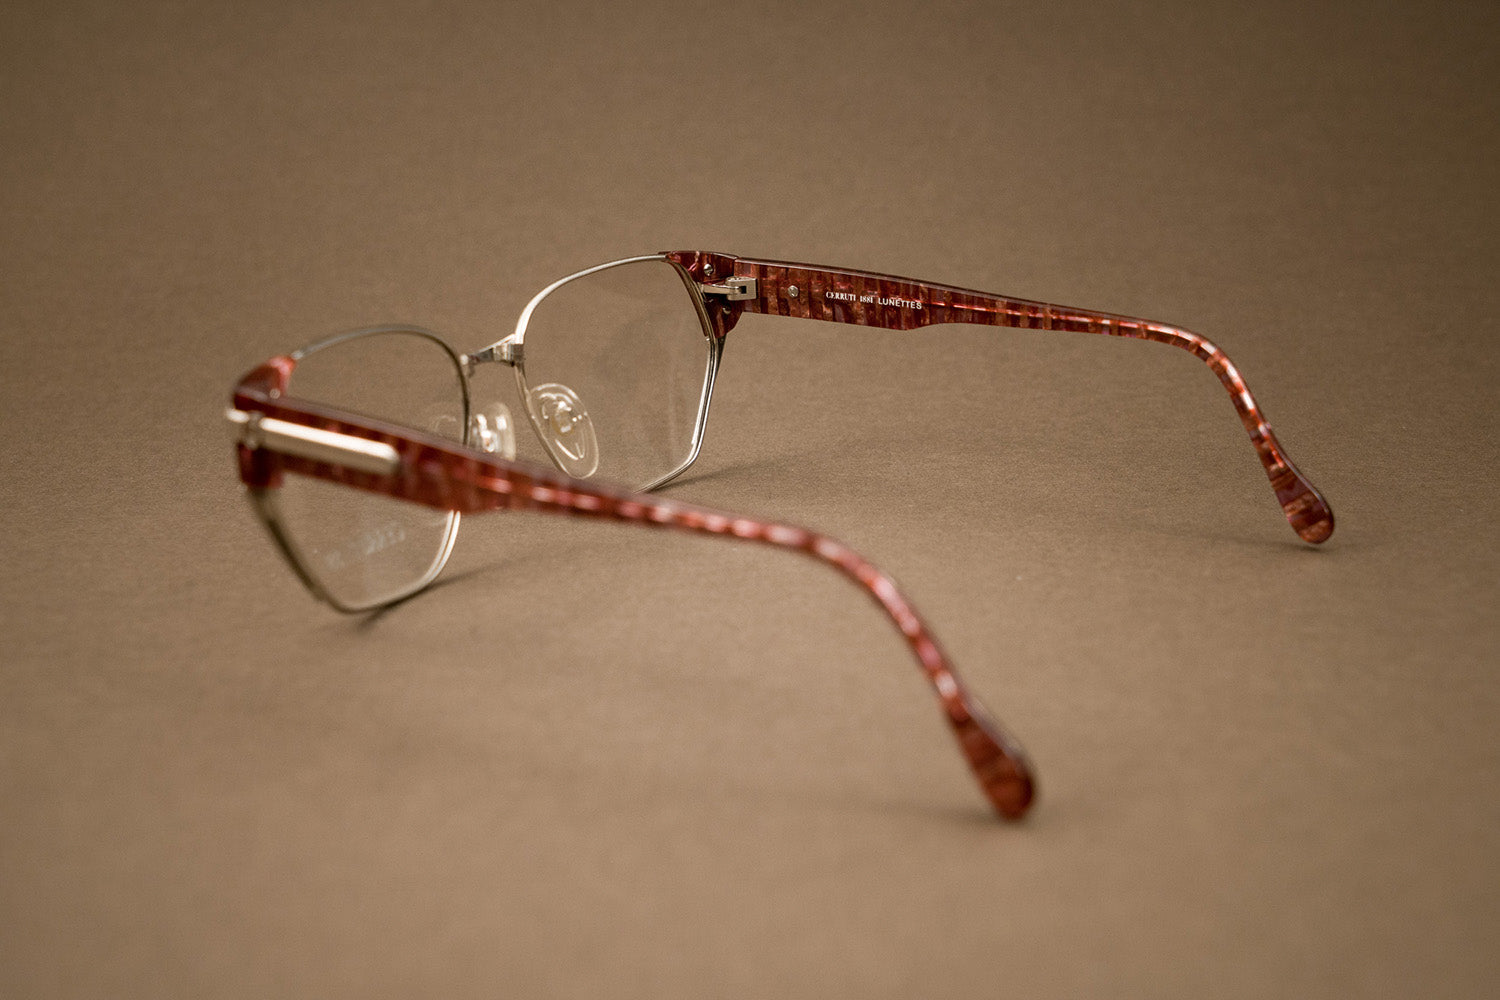 Cerruti 1881 glasses